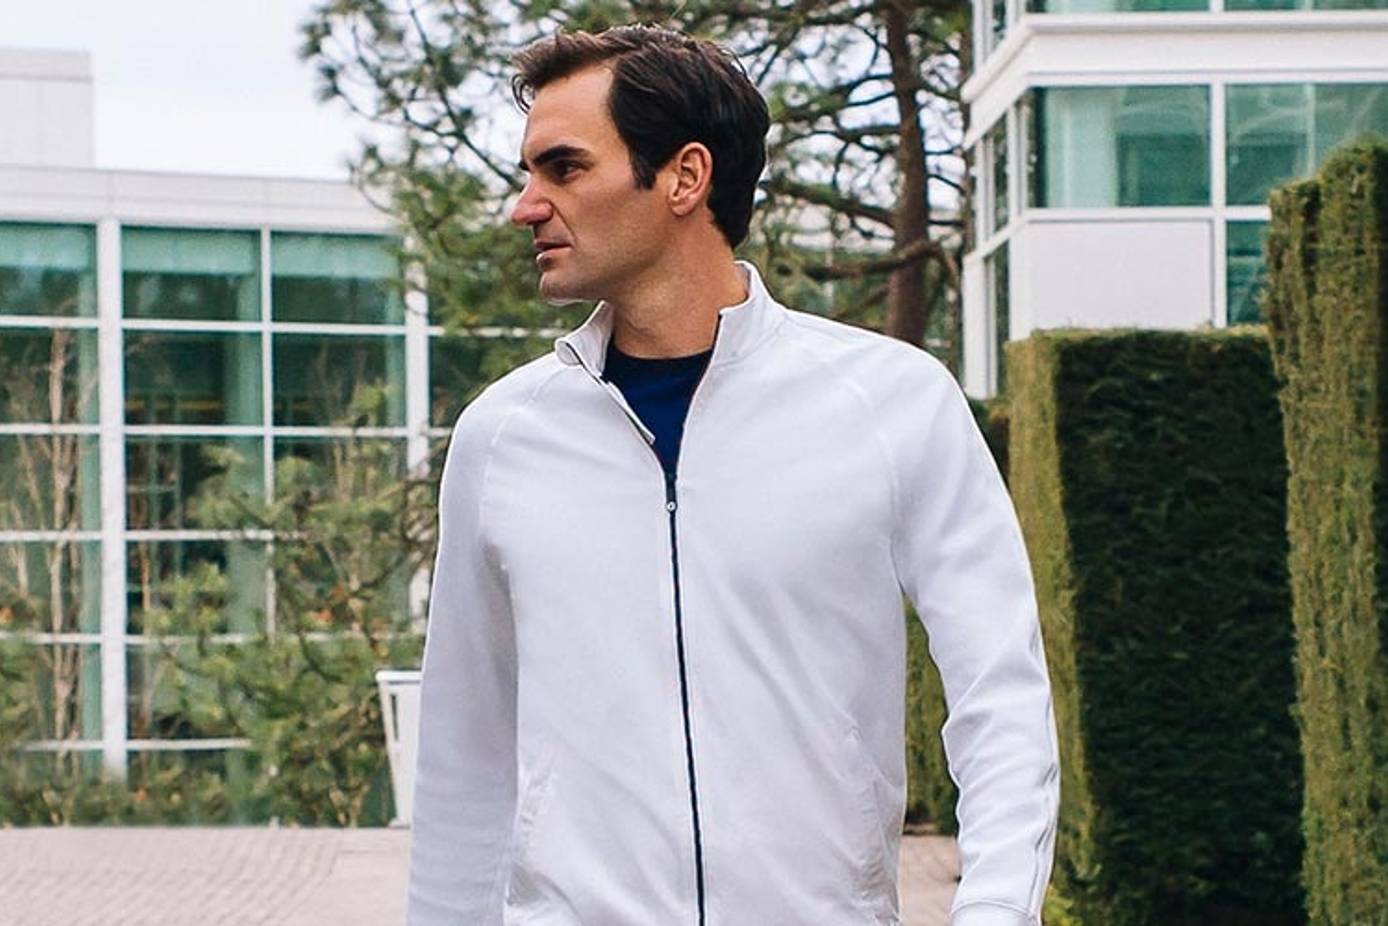 NikeLab unveils Federer “off-court” collection